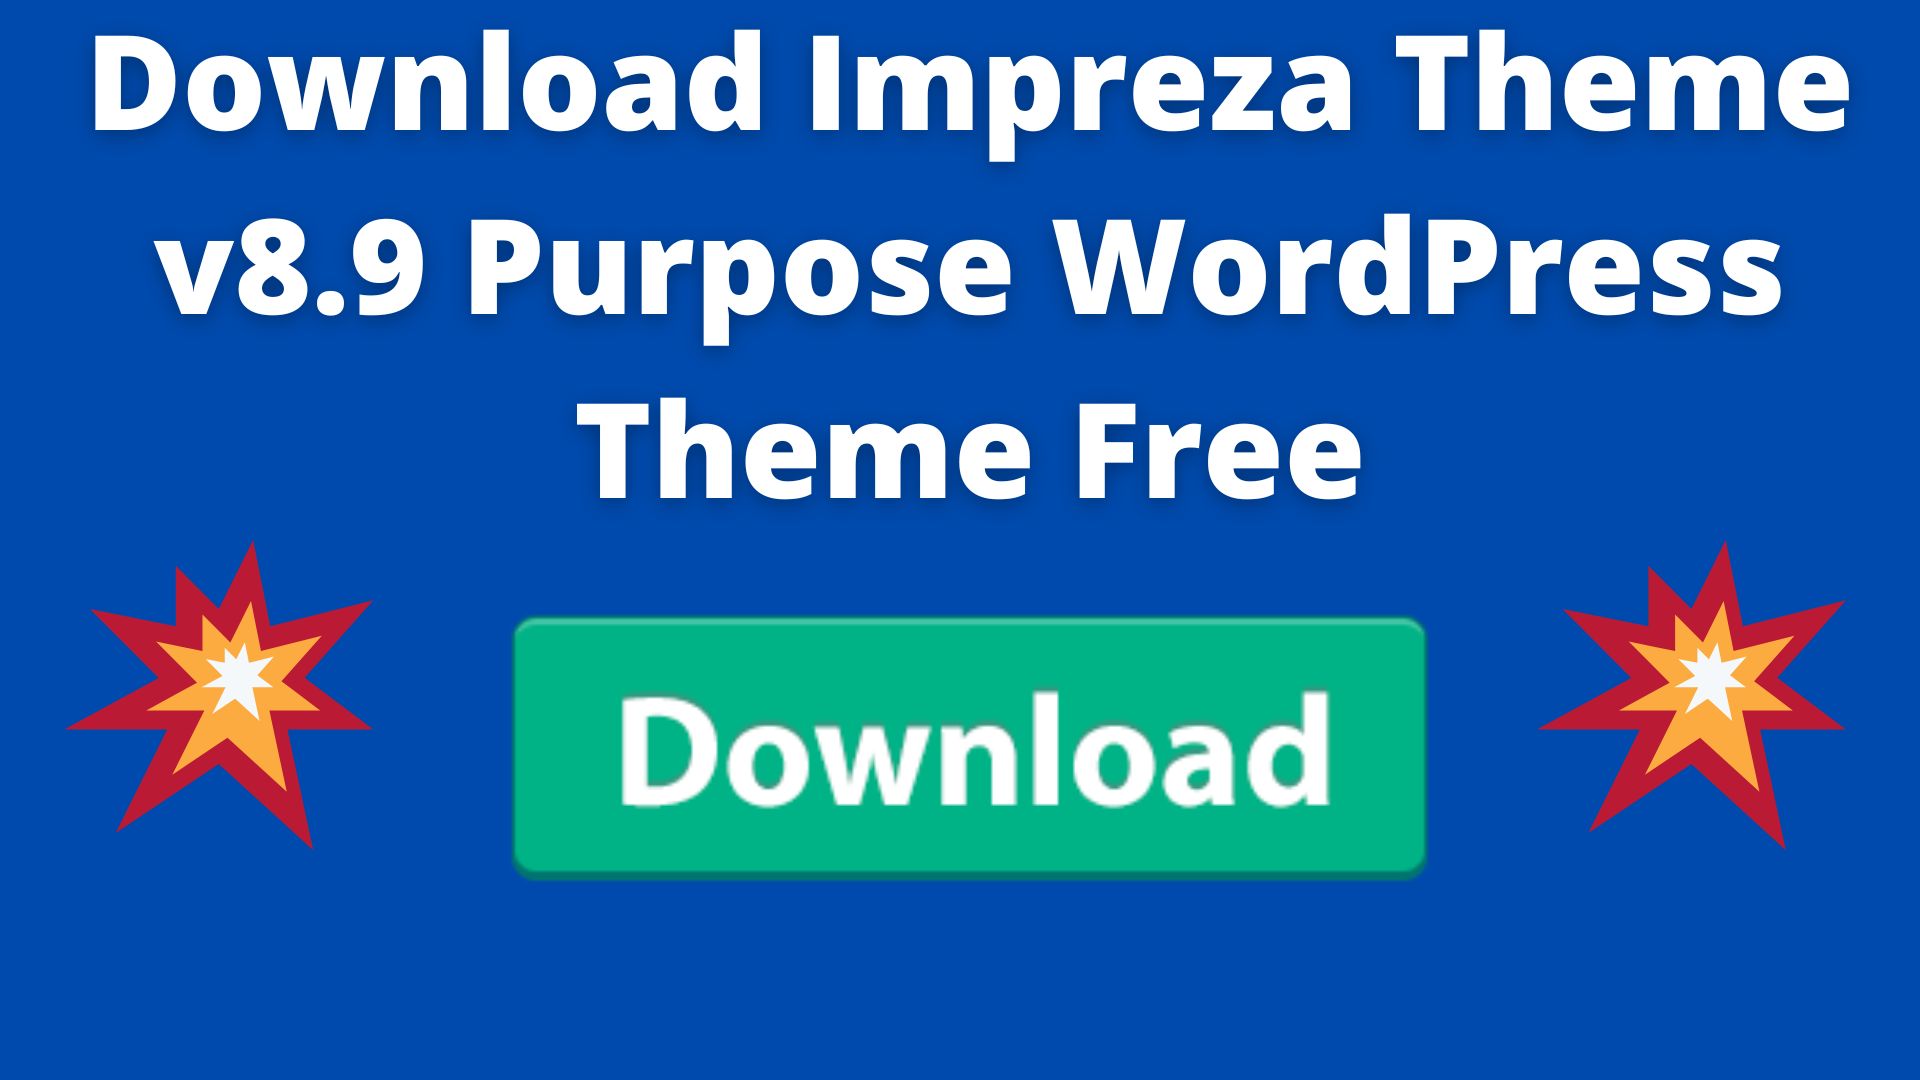 Download Impreza Theme V8.9 Purpose Wordpress Theme Free